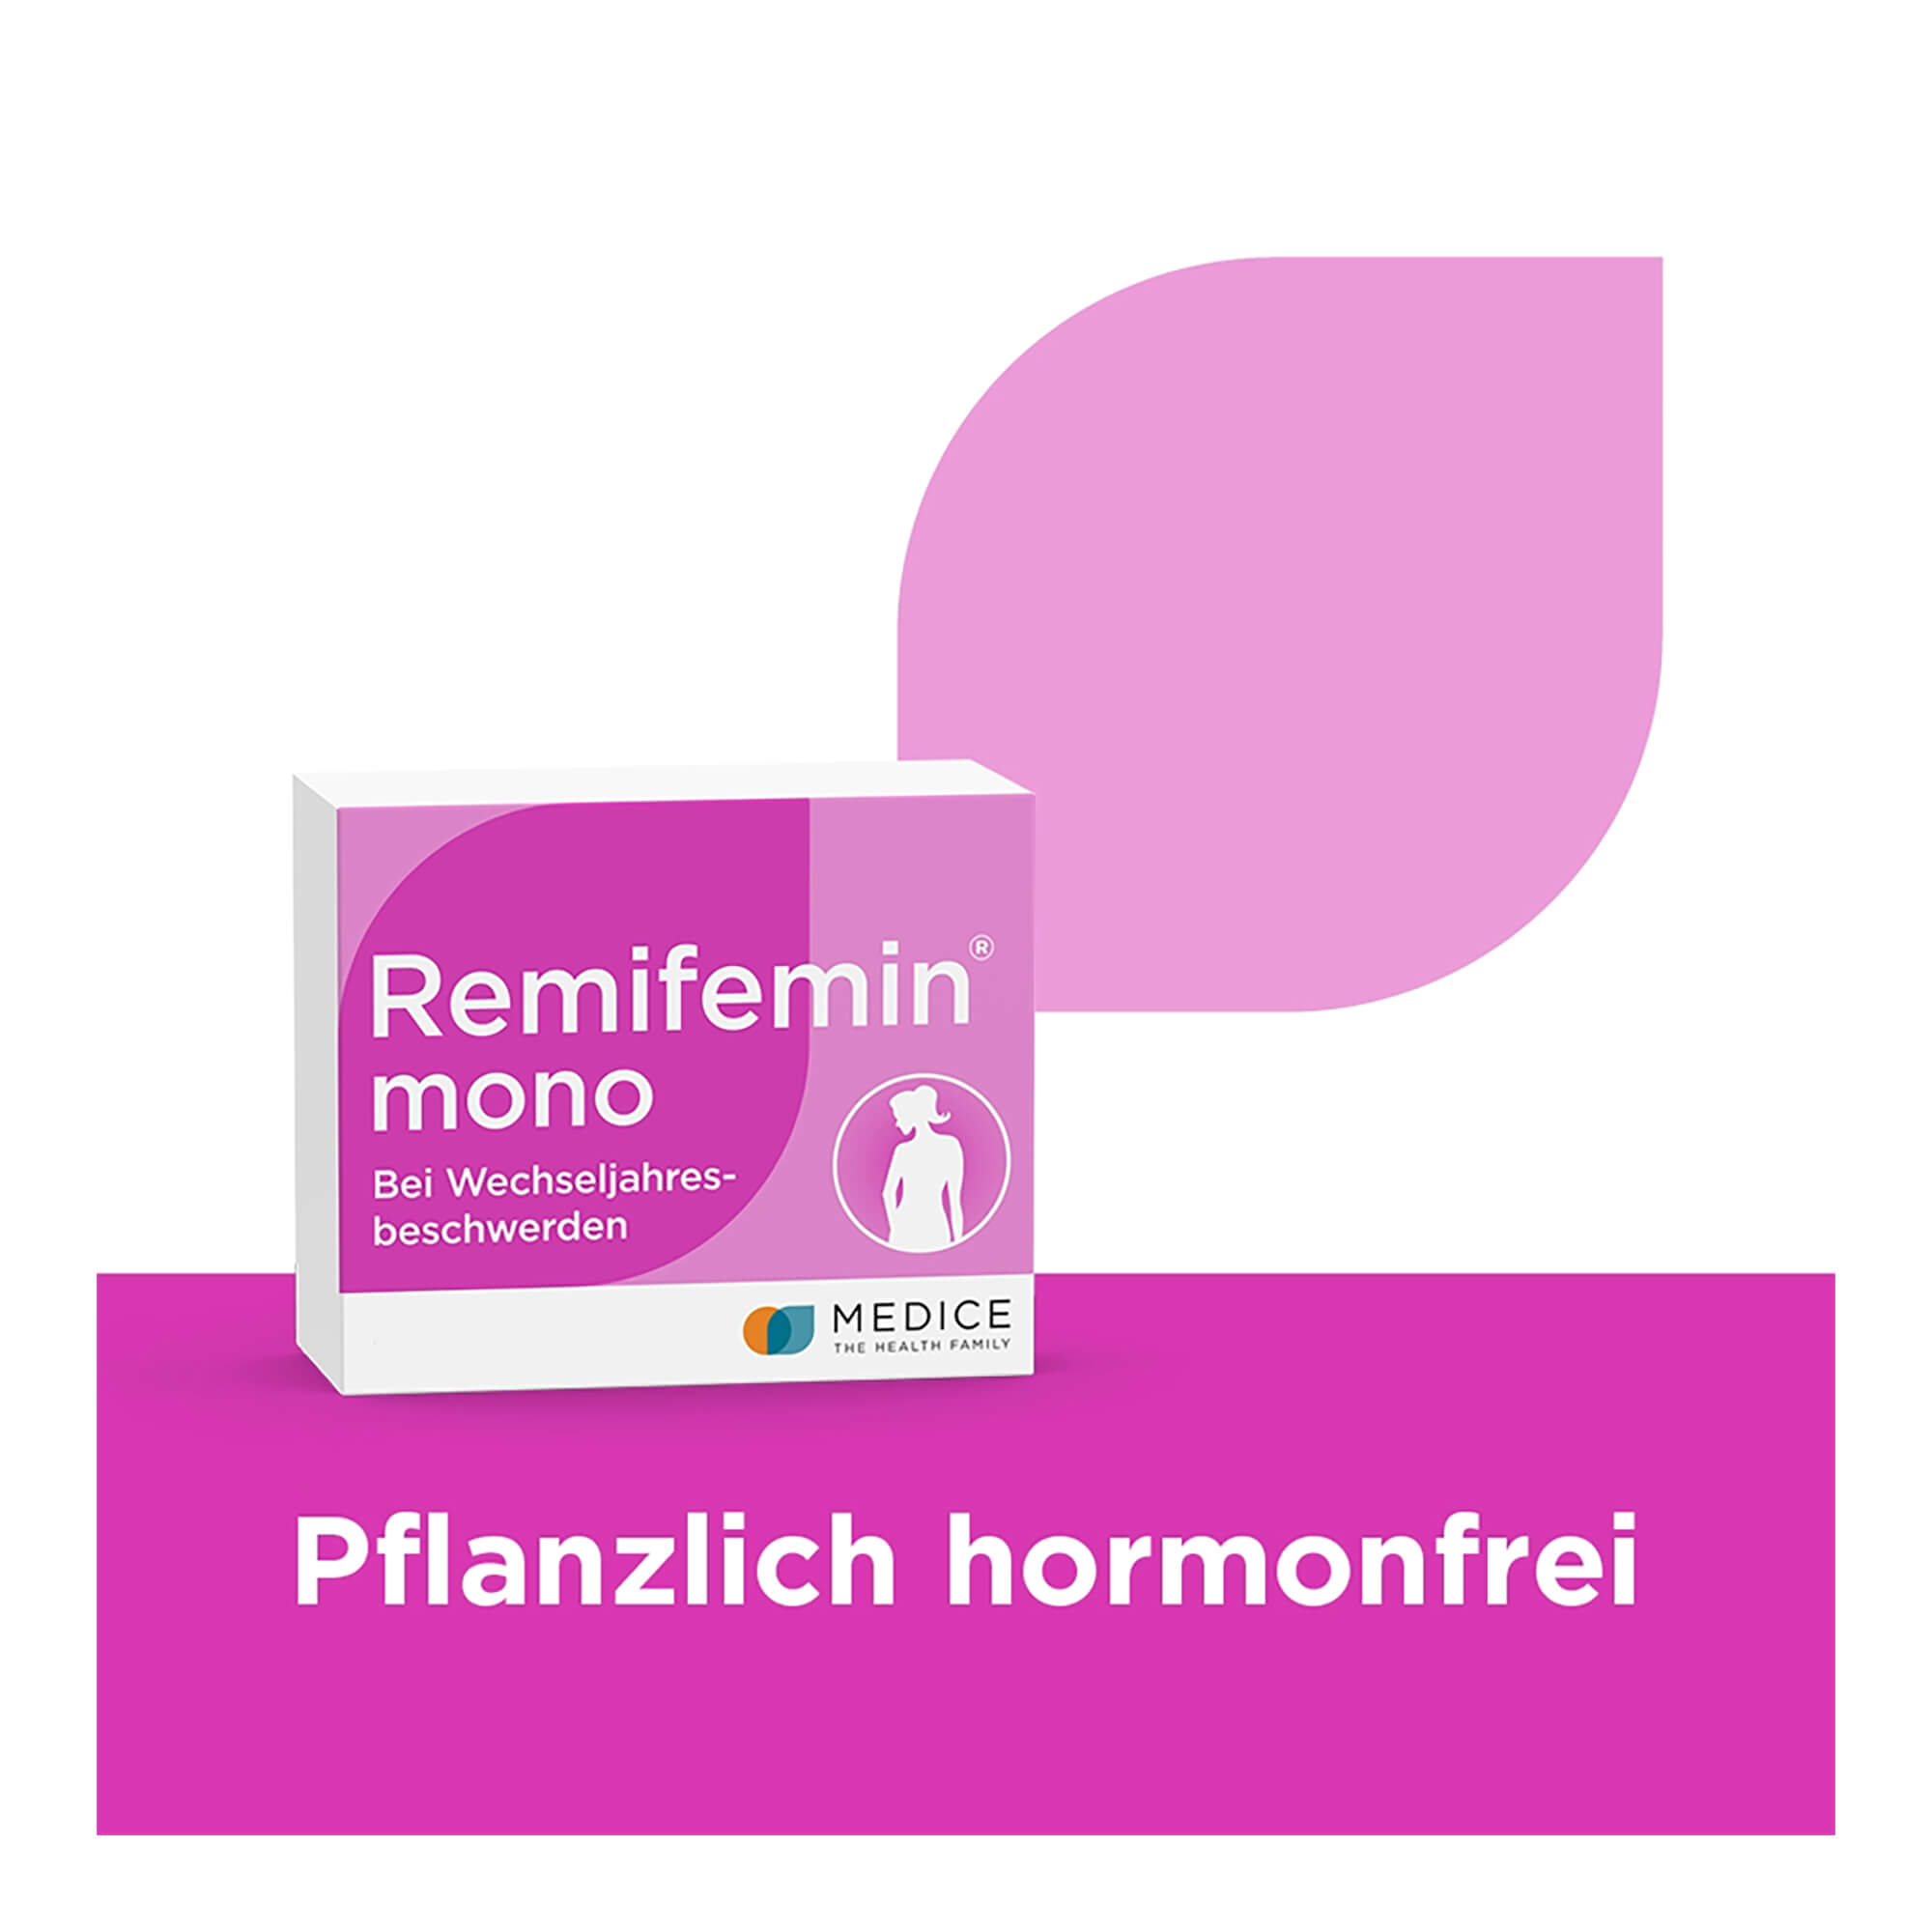 Grafik Remifemin mono Pflanzlich hormonfrei